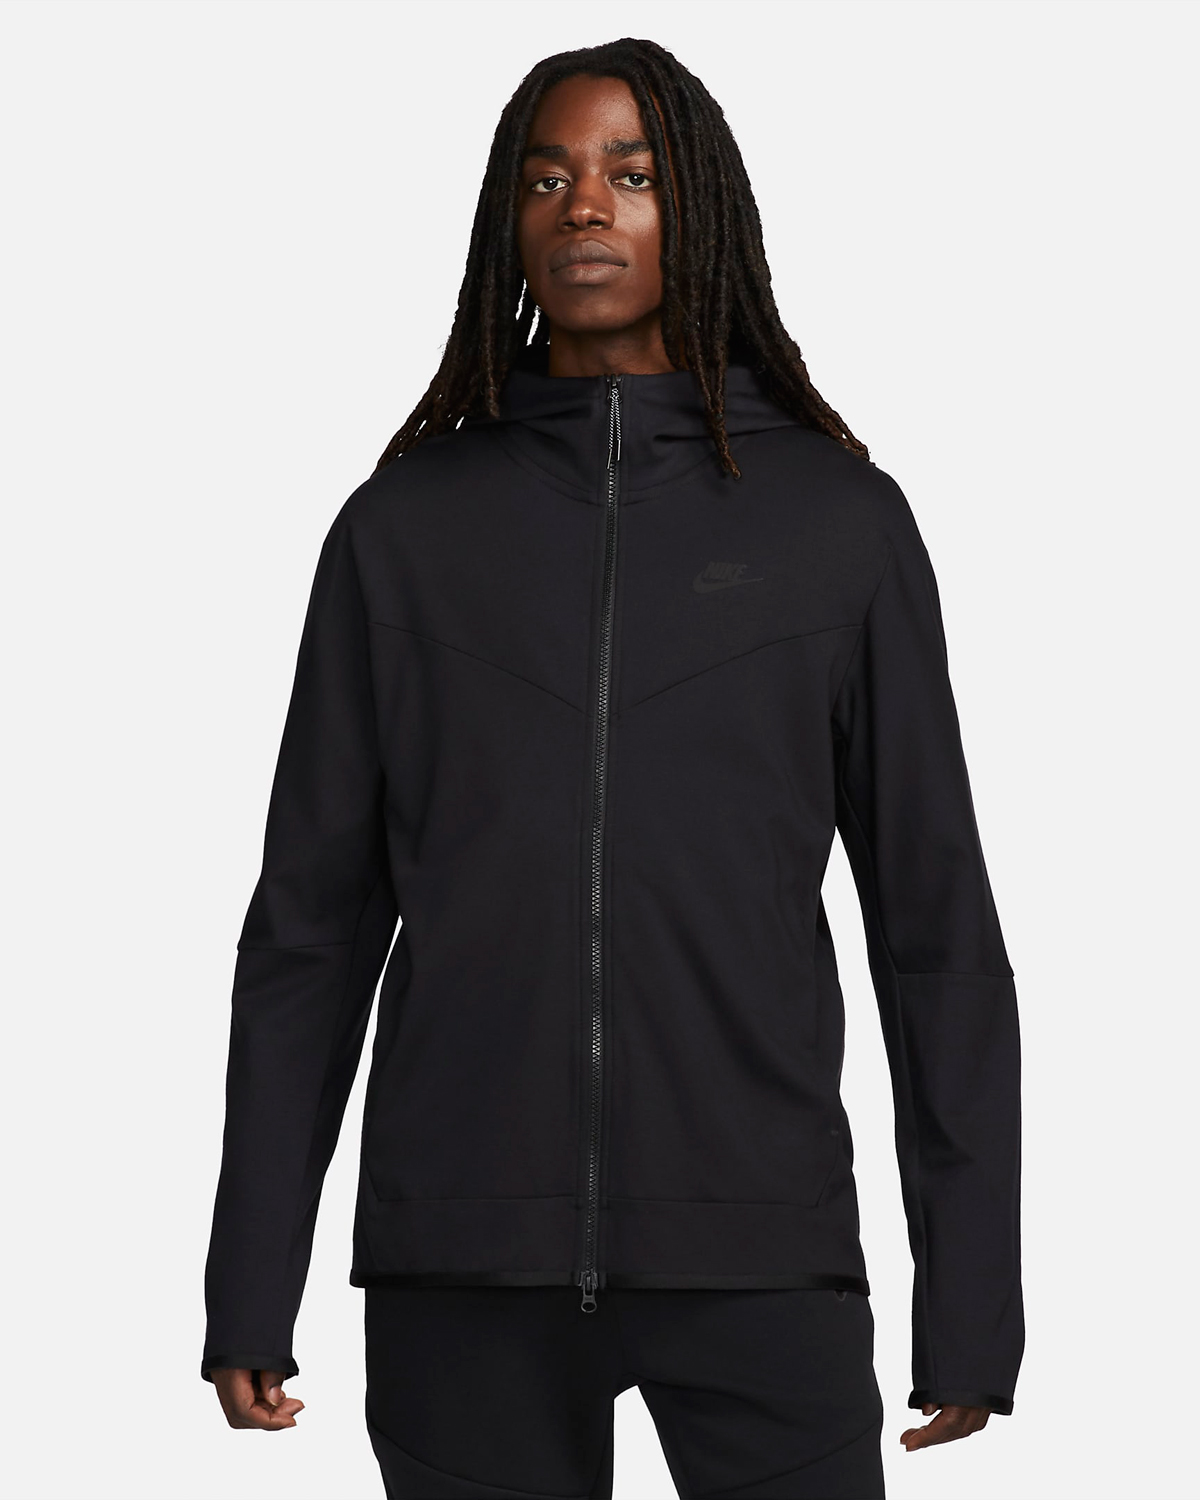 Nike-Tech-Fleece-Lightweight-Full-Zip-Hoodie-Jacket-Black